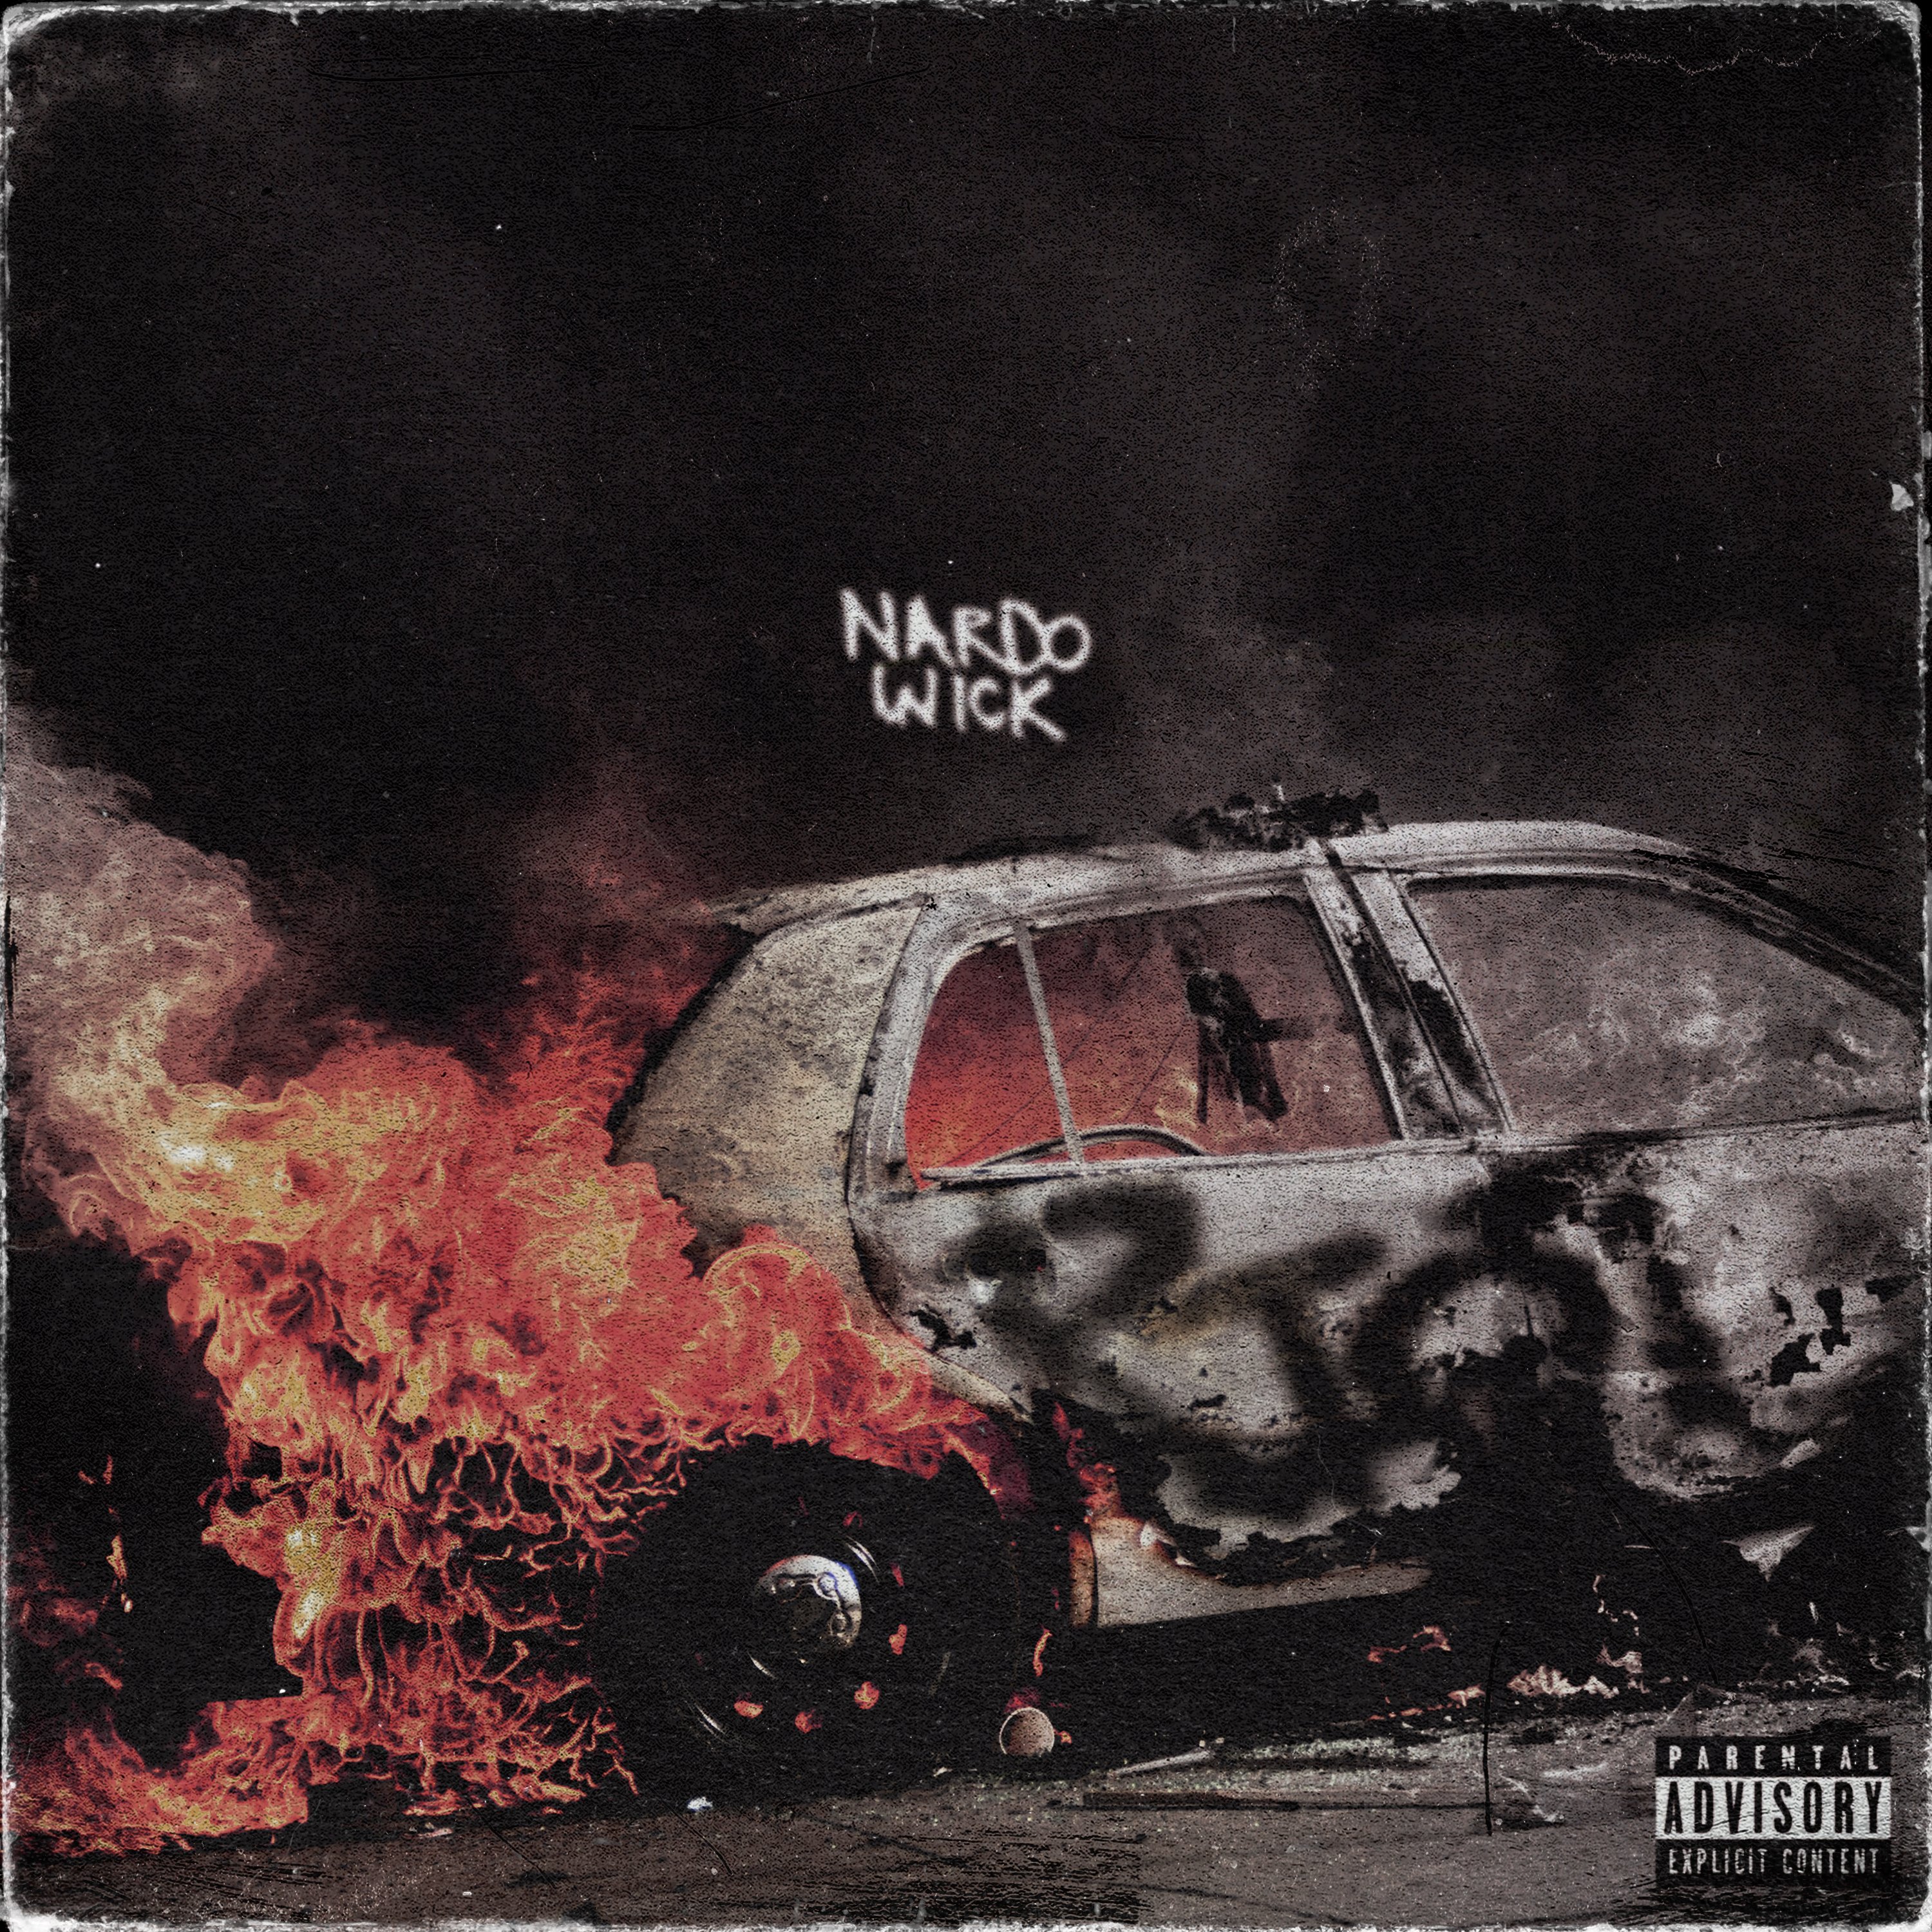 Nardo-Riot-Artwork-Final UPDATED